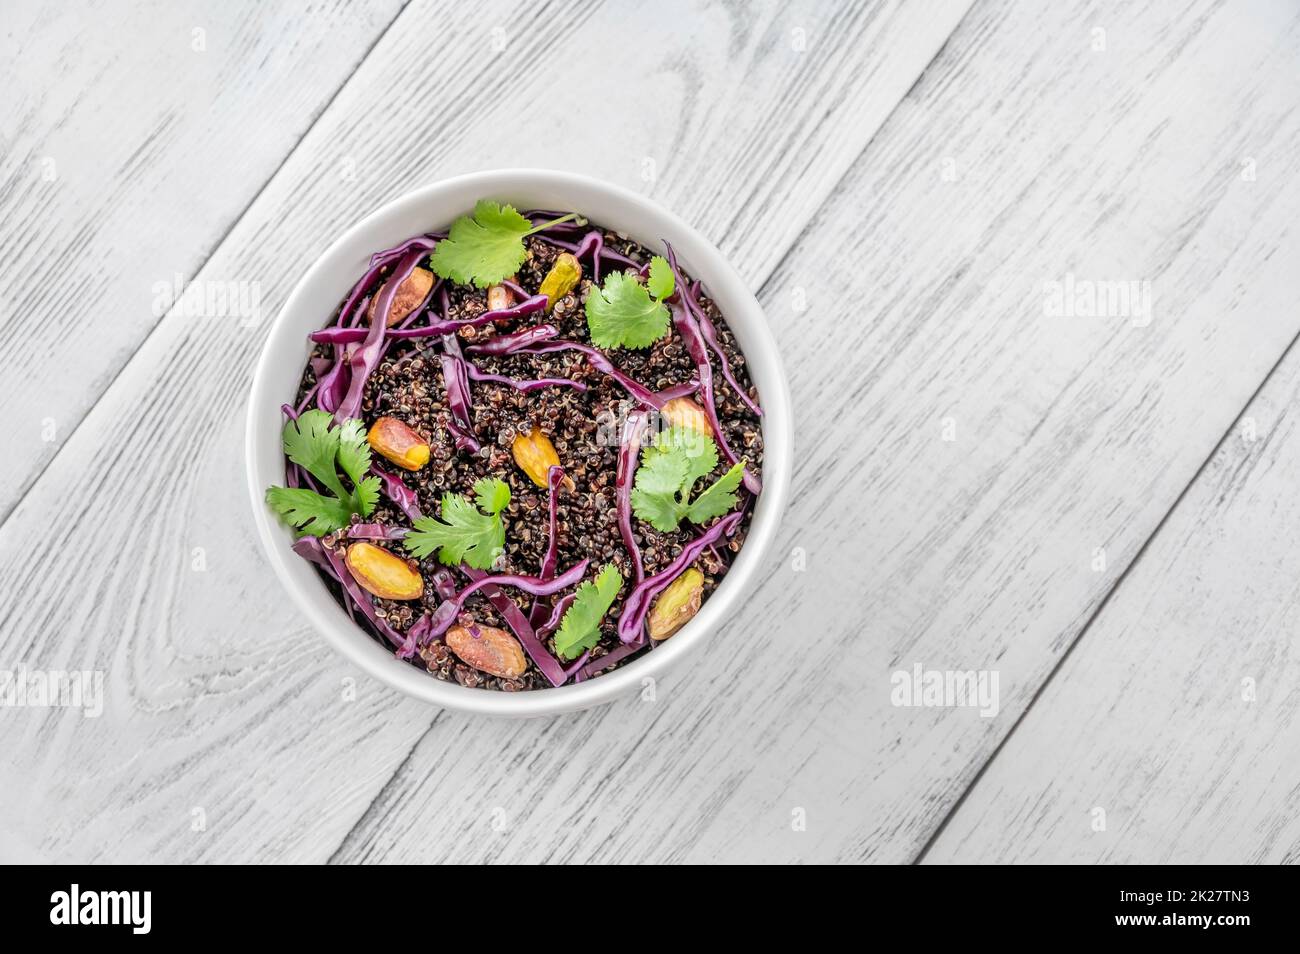 Crunchy quinoa salad Stock Photo